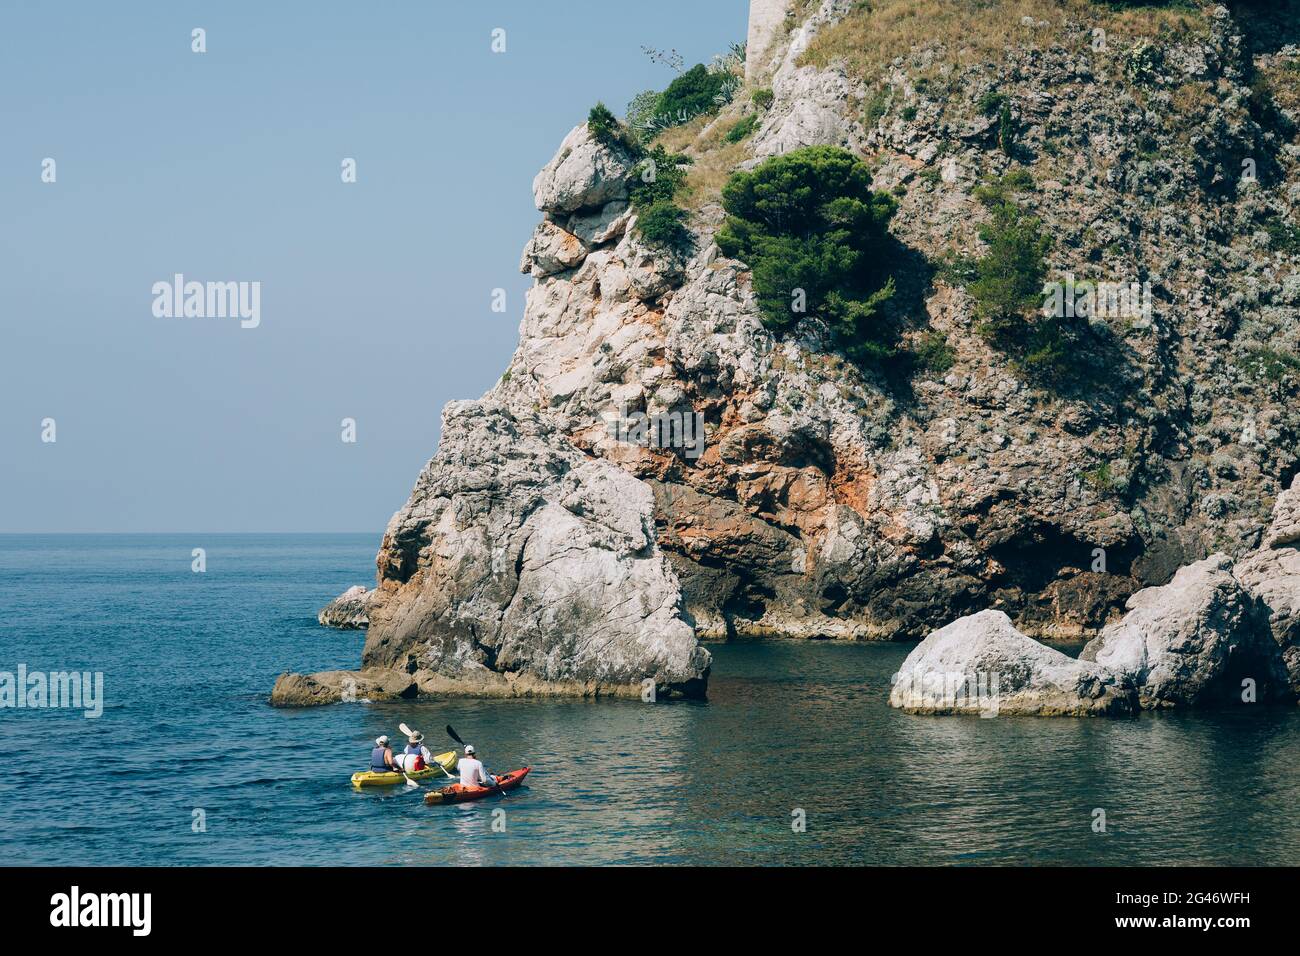 Kajak auf dem Meer. Kajakfahren im Meer in der Nähe von Dubrovnik, kroatische touristische Stockfoto